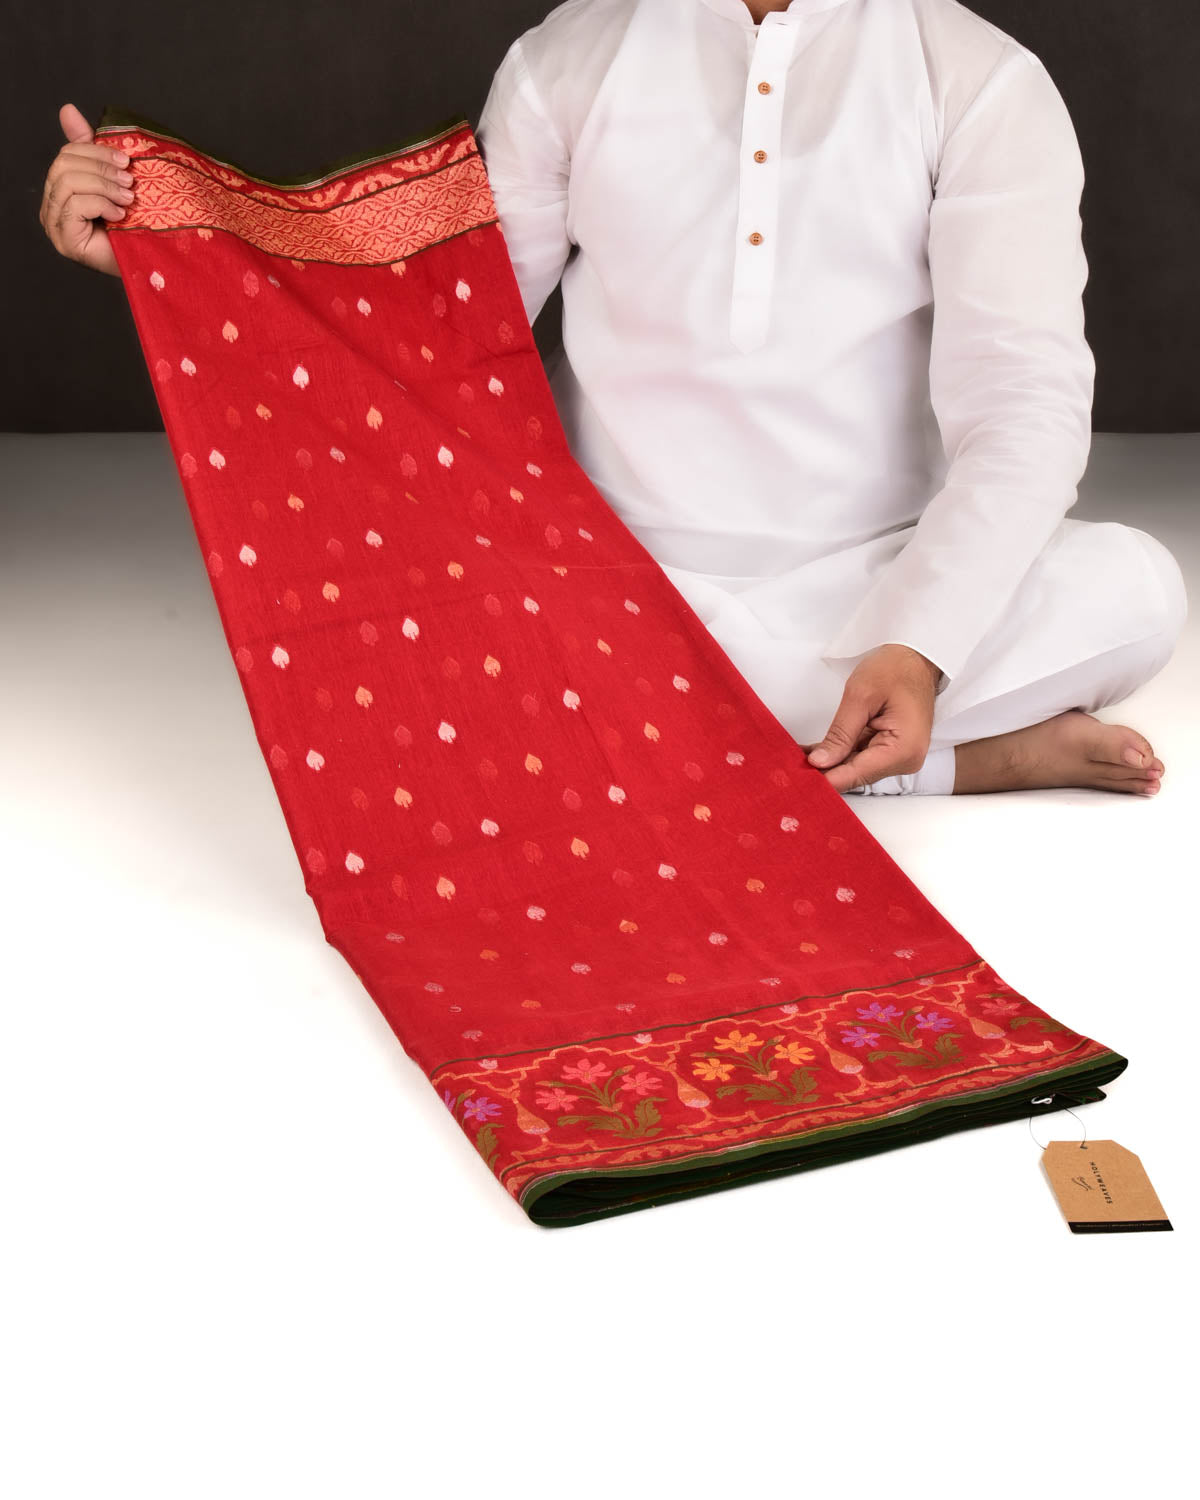 Red Banarasi Gold & Silver Zari Hukum Buti Cutwork Brocade Handwoven Handloom Cotton Saree with Meenekari Border-HolyWeaves